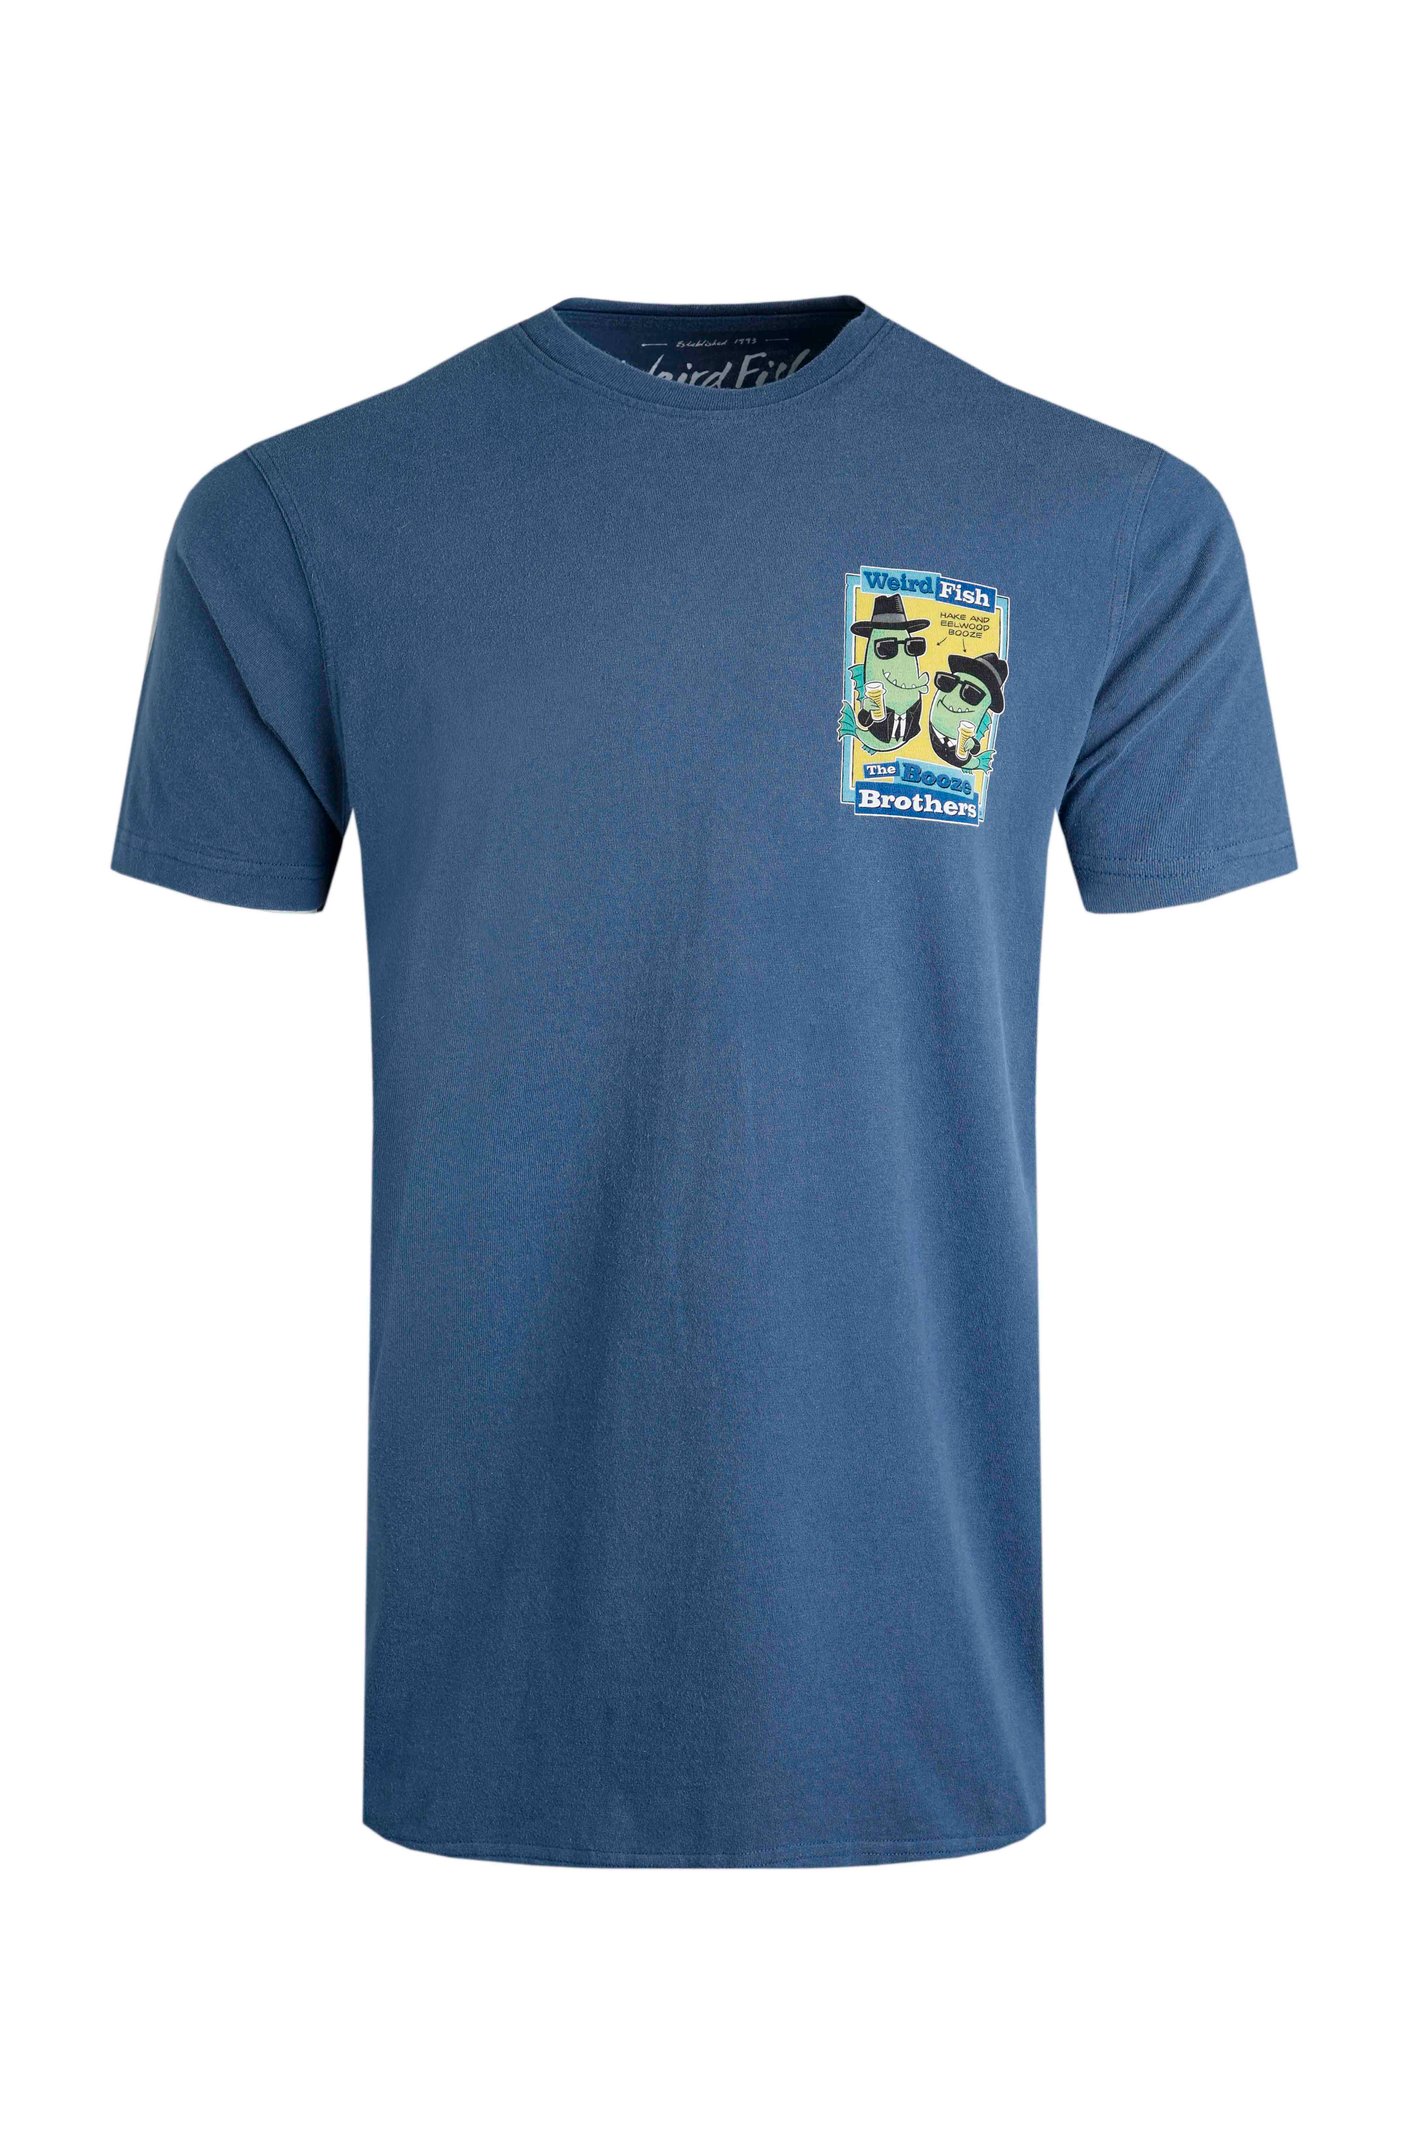 Weird Fish Booze Brothers Artist T-Shirt Ensign Blue Size S